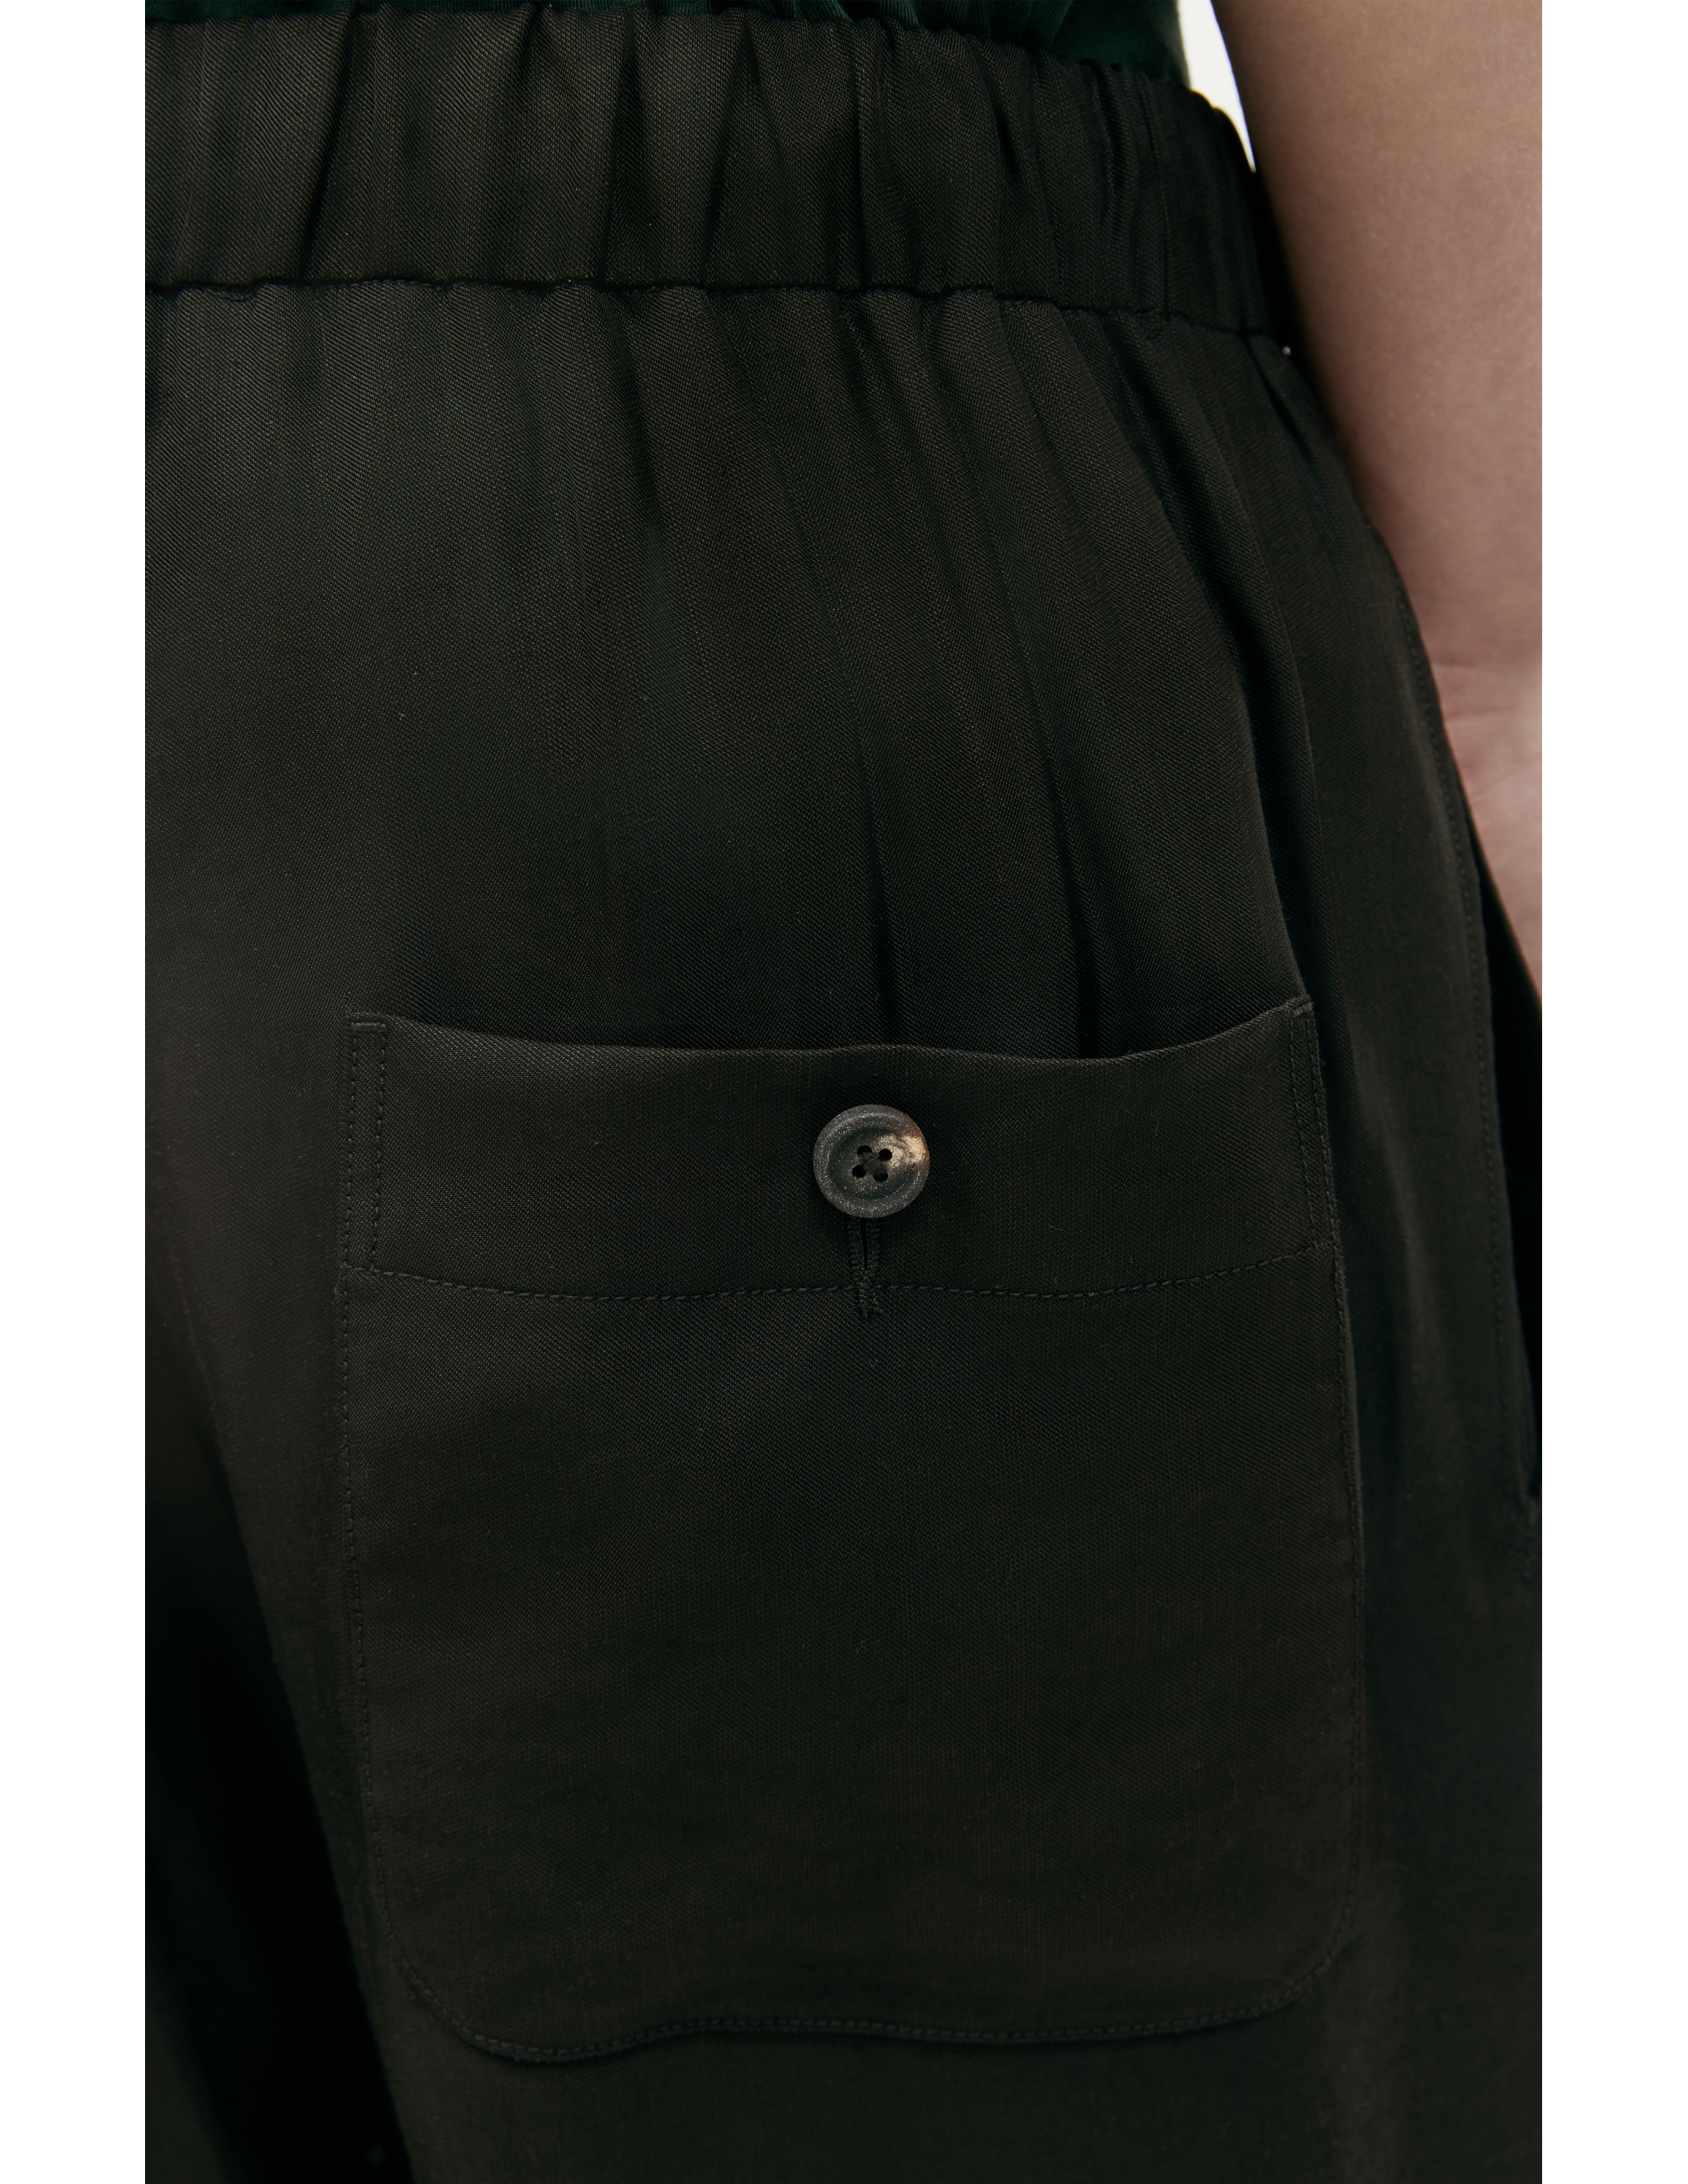 Черные брюки на резинке Ziggy Chen 0M2310514, размер 48;50 - фото 4